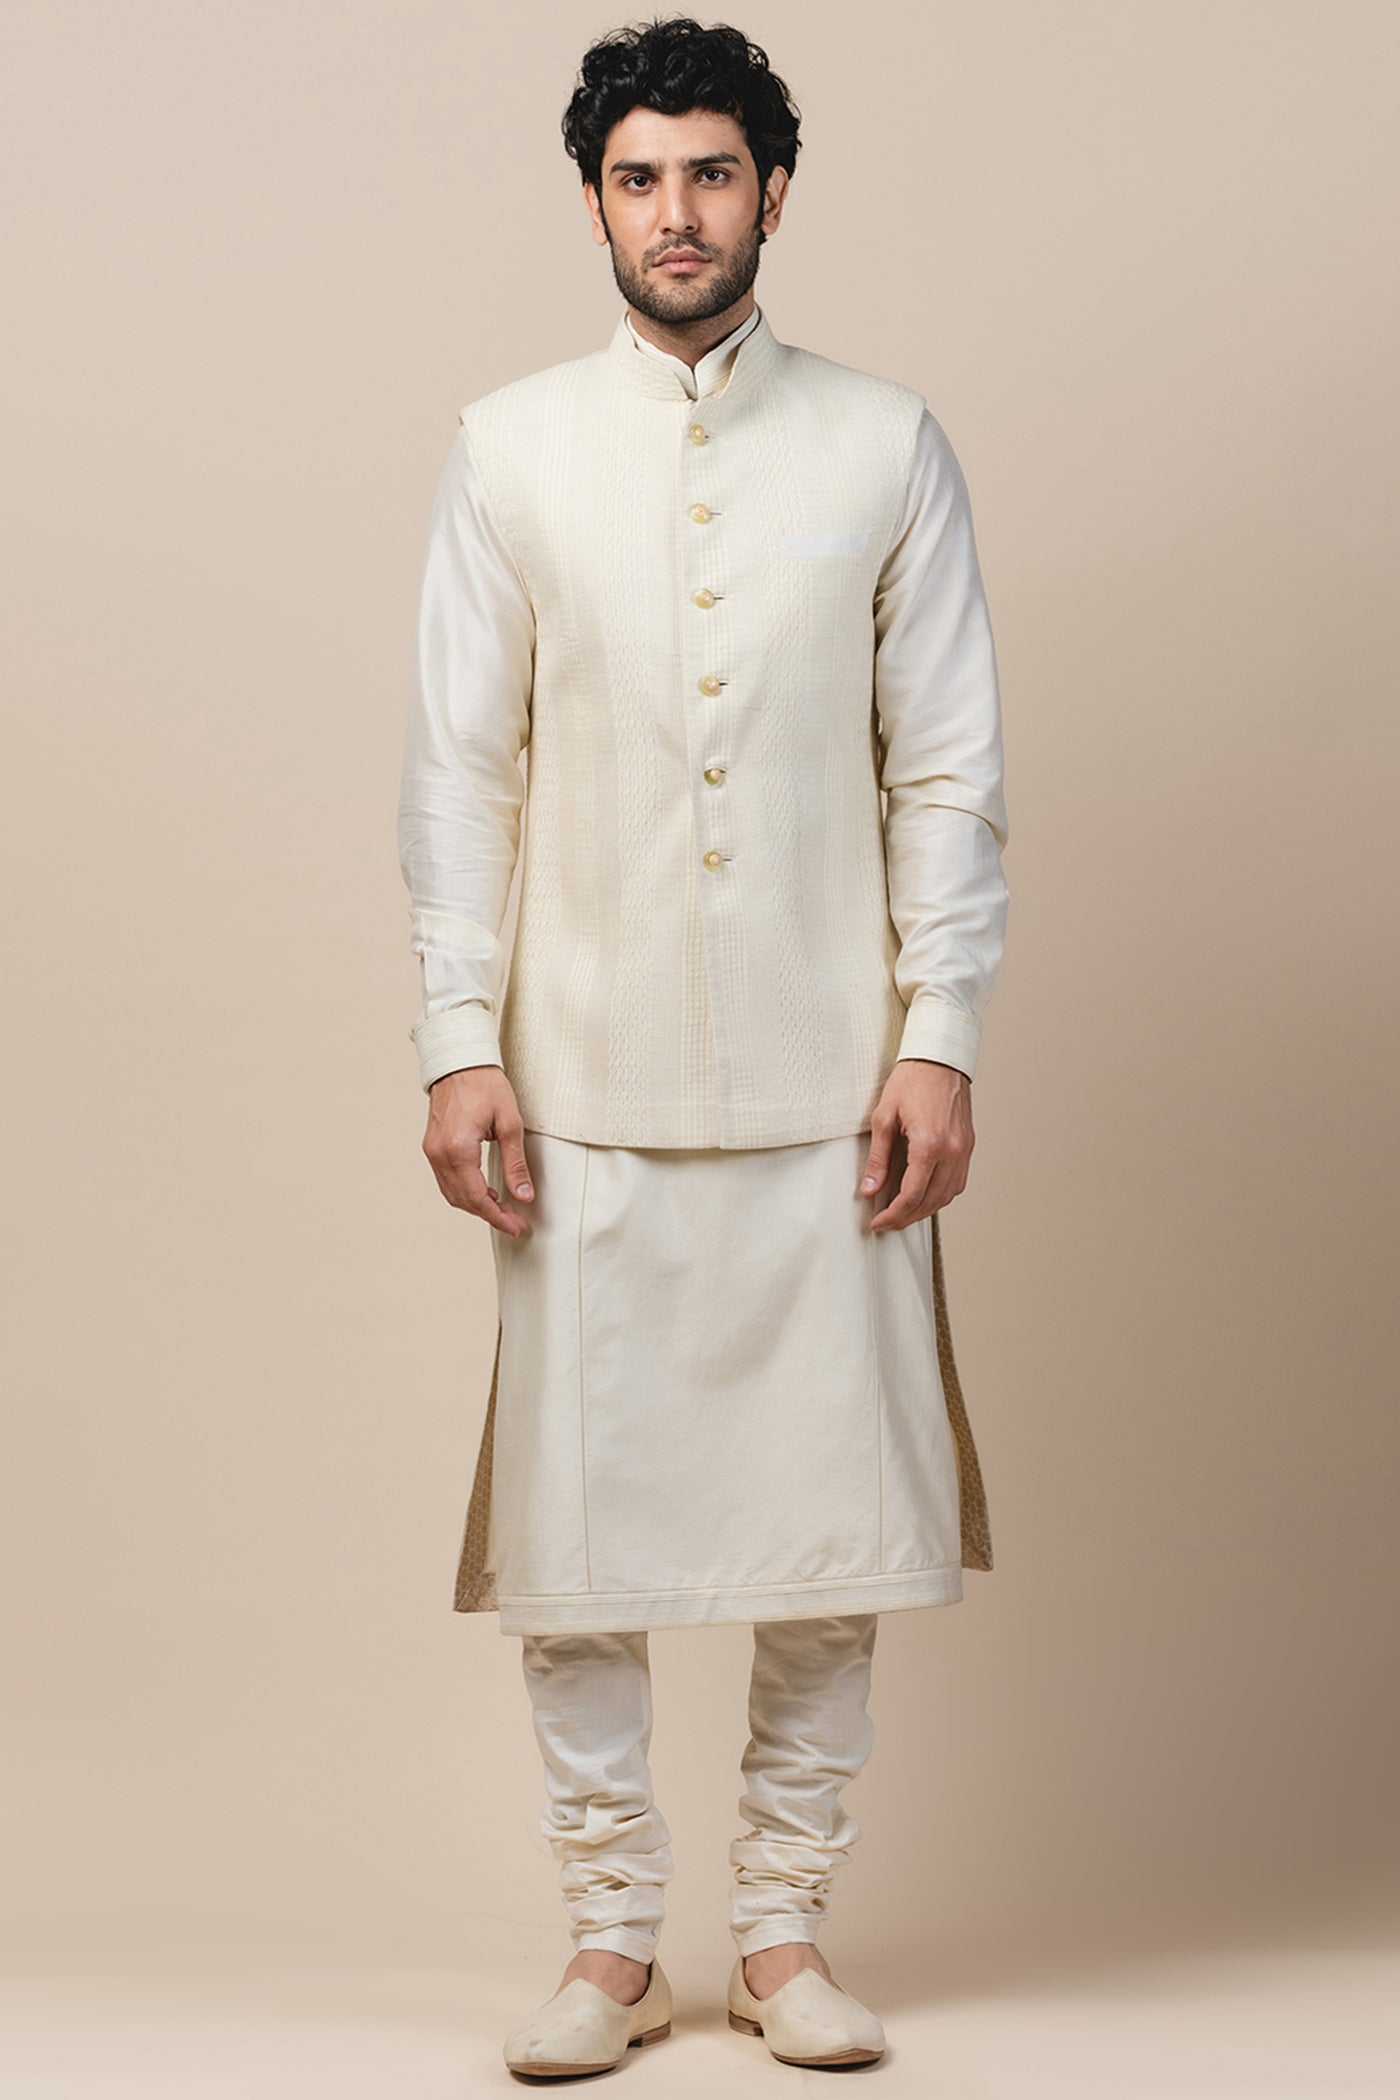 tarun tahiliani Textured Bundi waistcoat ivory online shopping melange singapore indian designer wear groom wedding festive